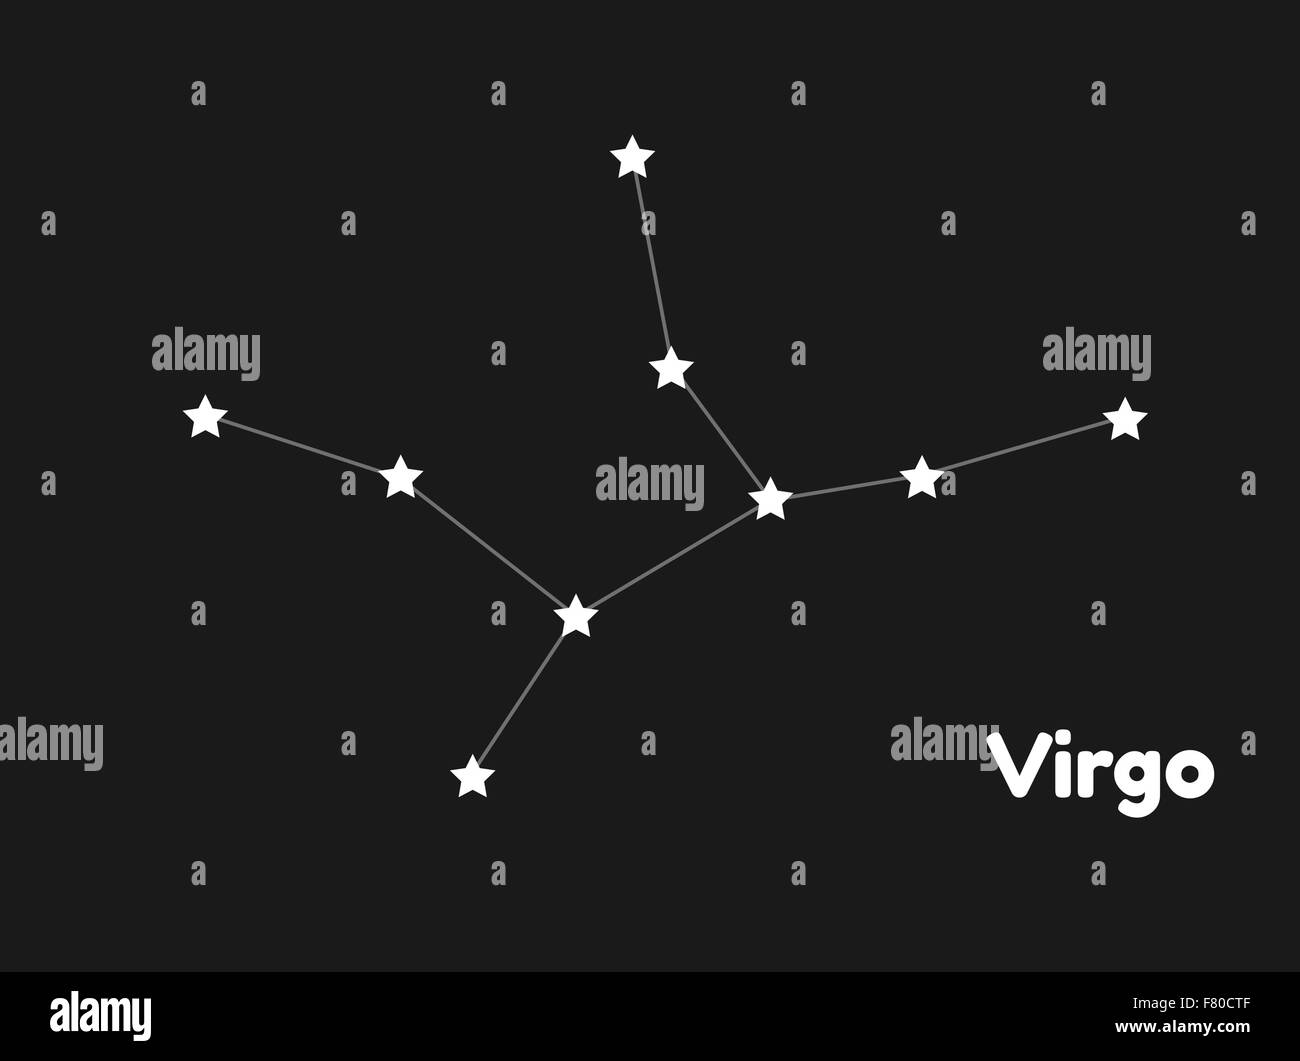 Virgo zodiac sign Black and White Stock Photos & Images - Alamy